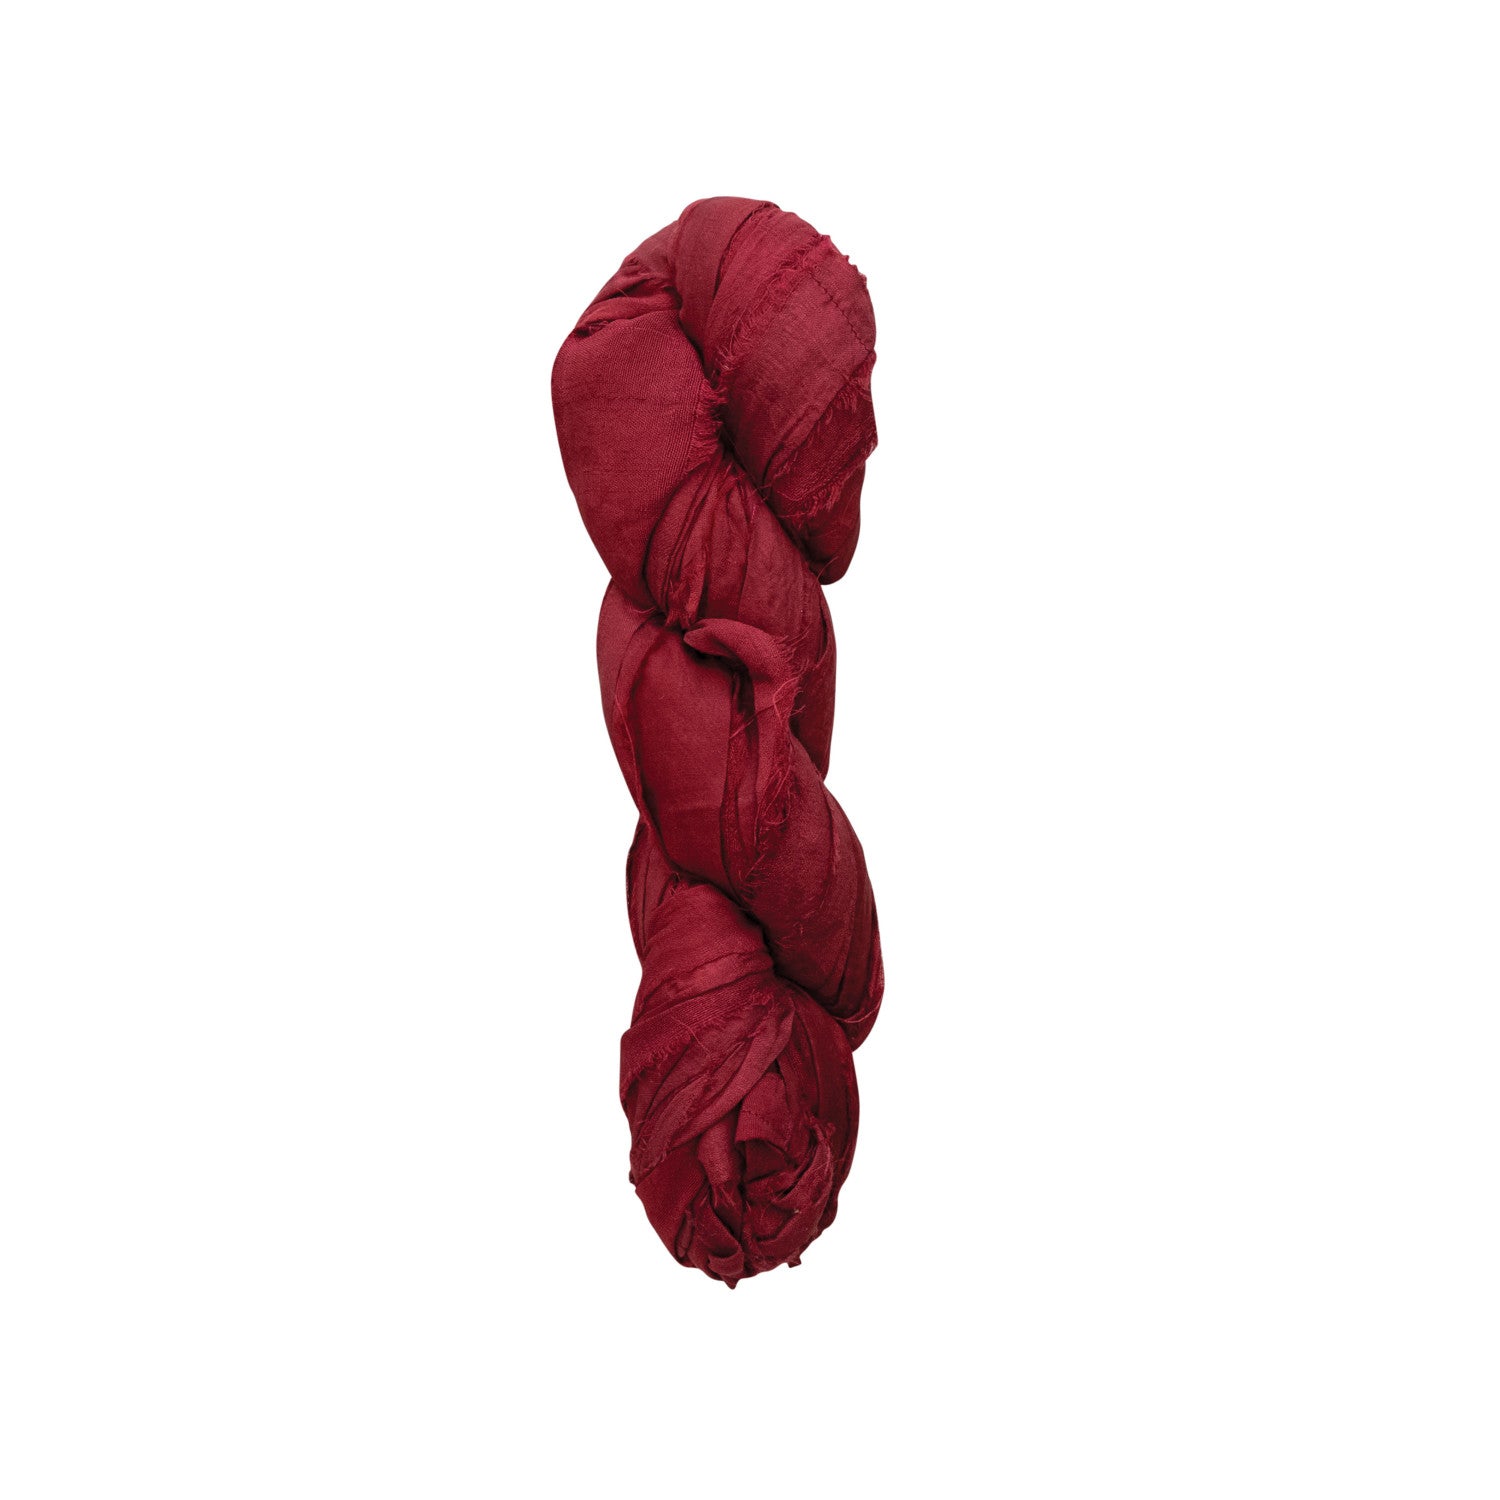 70-75 Yard Recycled Torn Silk Ribbon, Burgundy